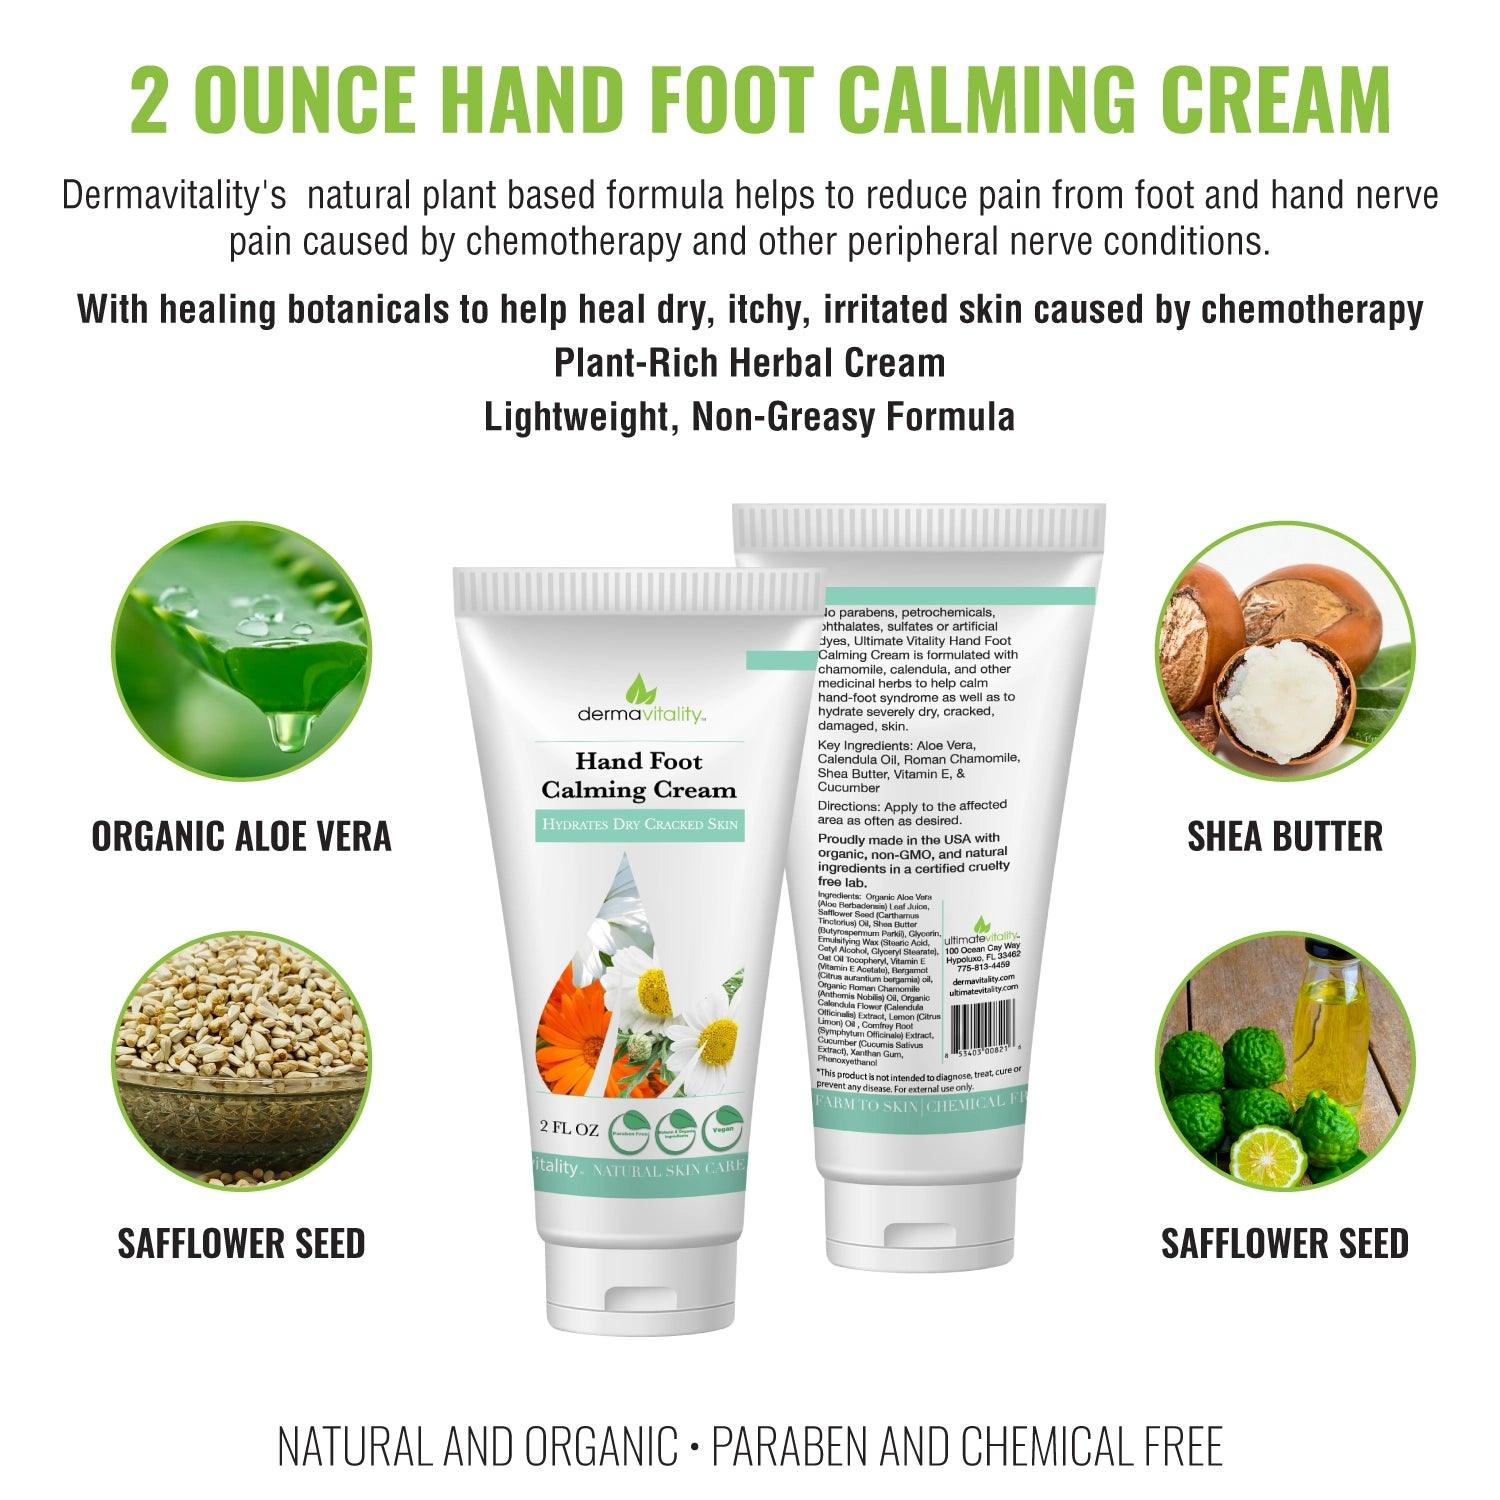 2 ounce hand foot calming cream